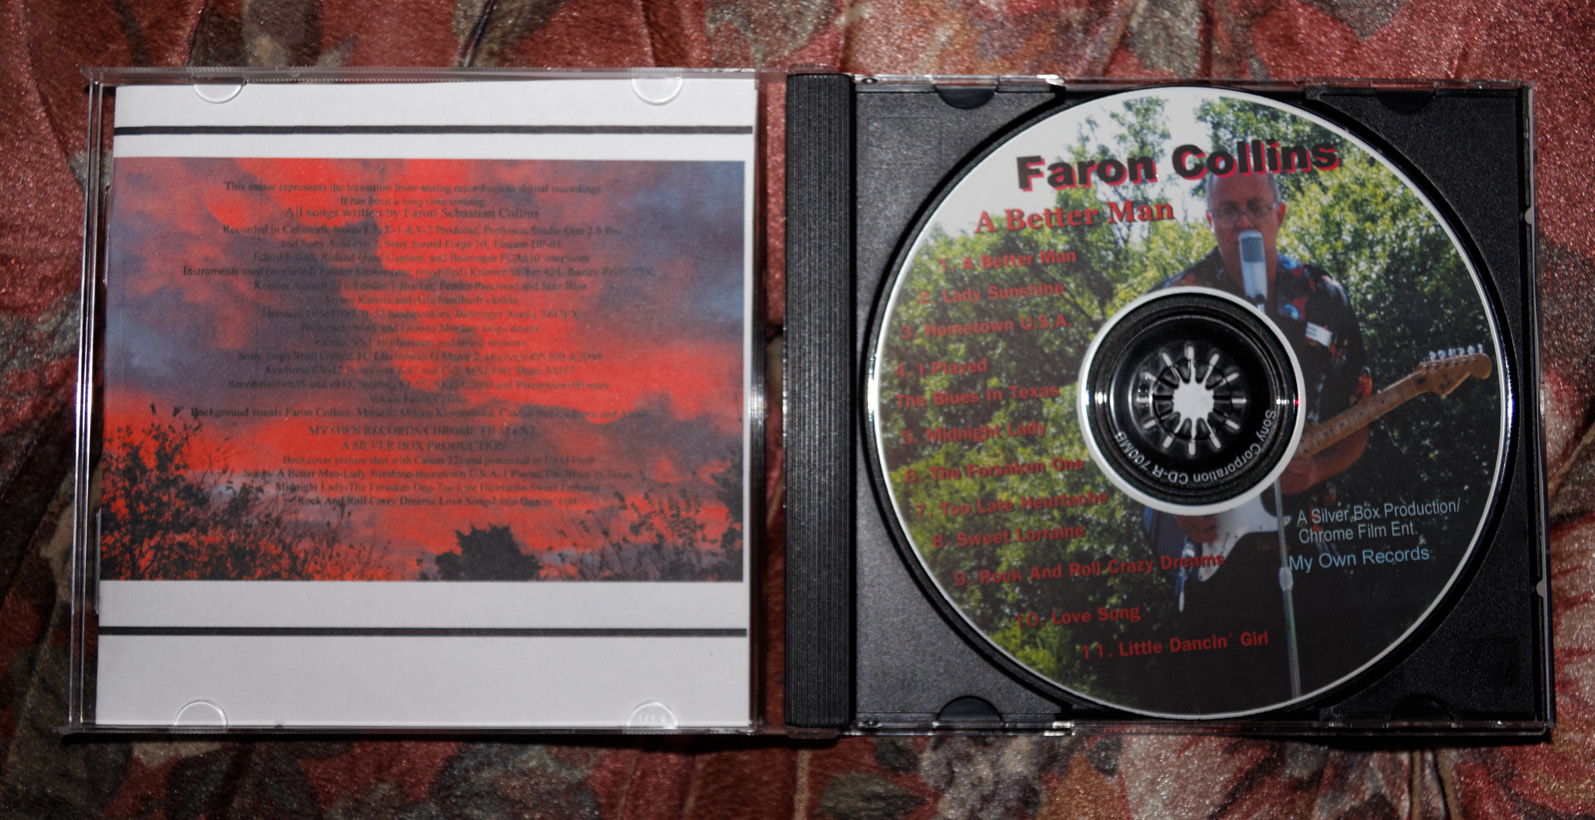 Faron Collins-CD (A Better Man)